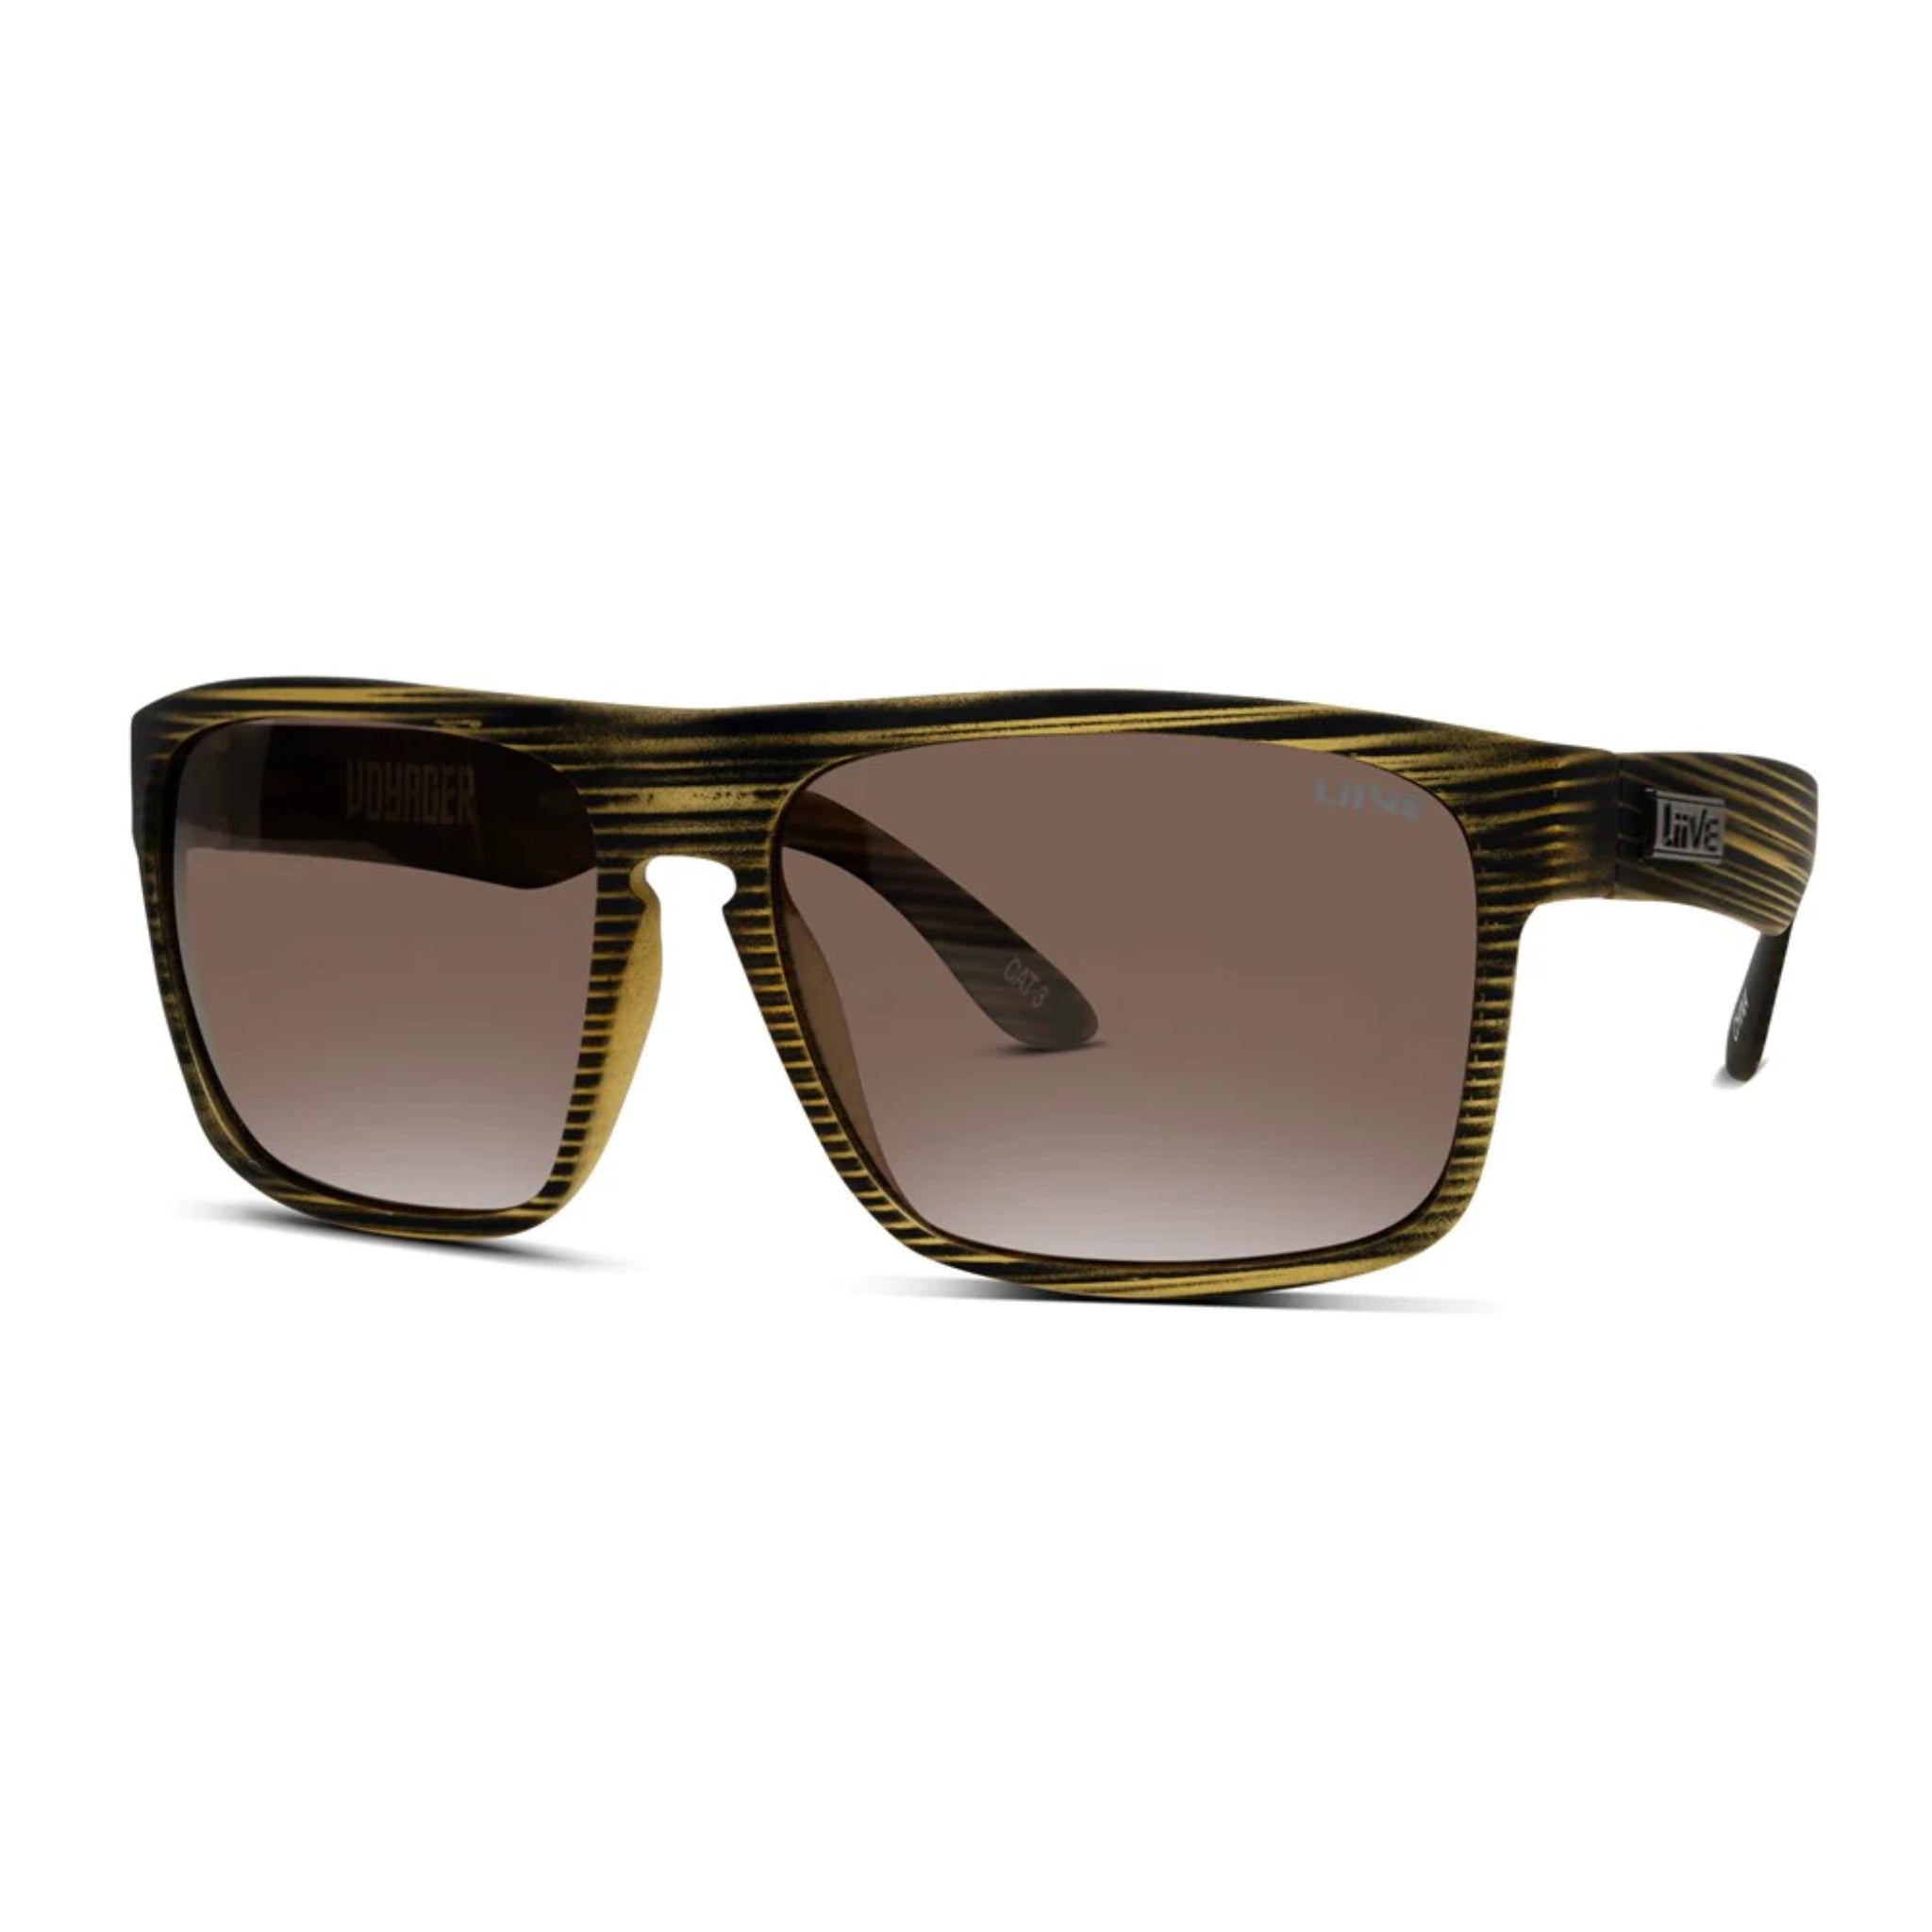 Liive Voyager Sunglasses - Polar Brown Stripe